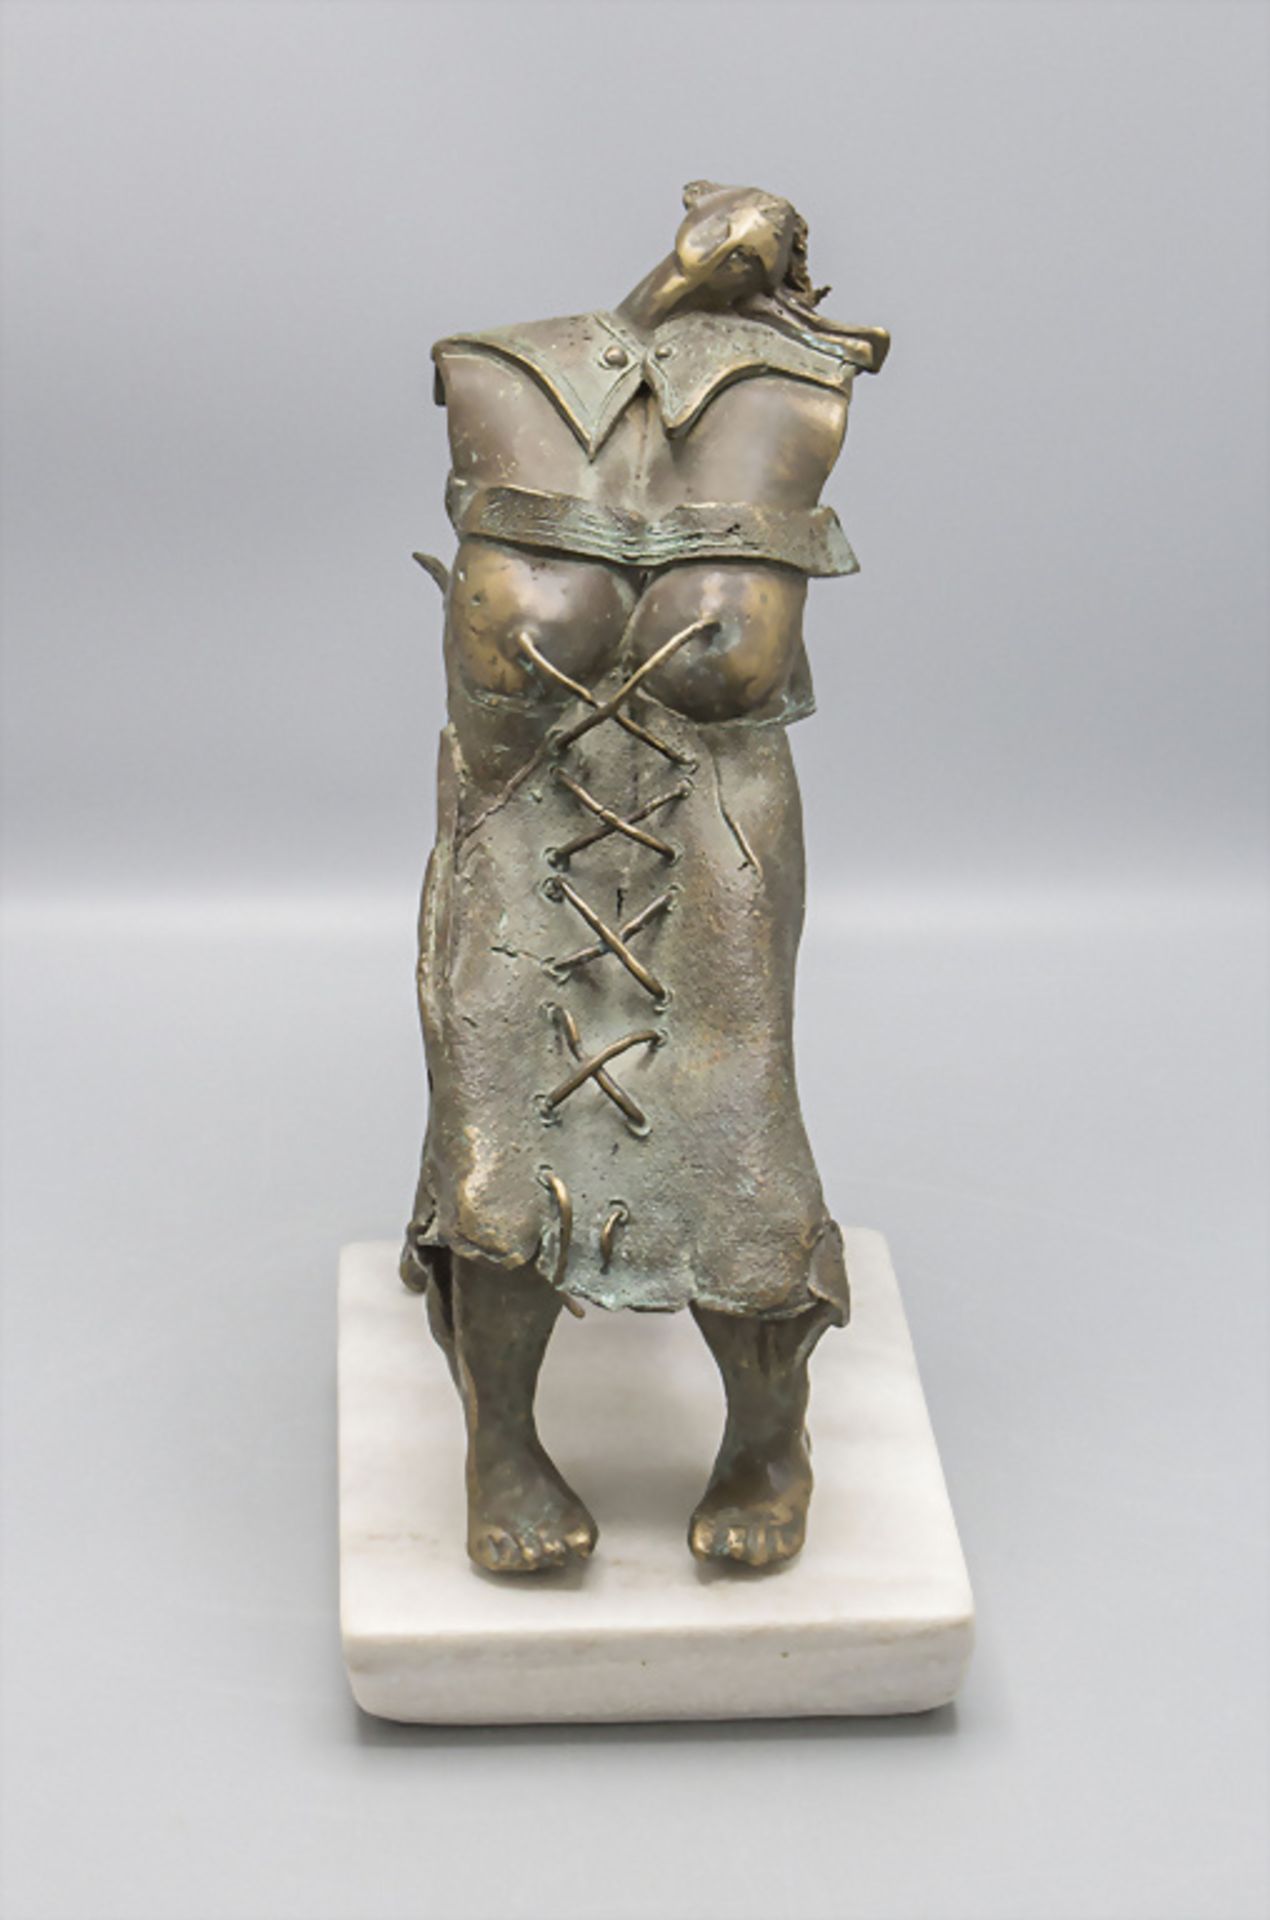 Bronze Skulptur 'Sitzender Akt' / A bronze sculpture of a 'Sitting nude' - Image 2 of 8